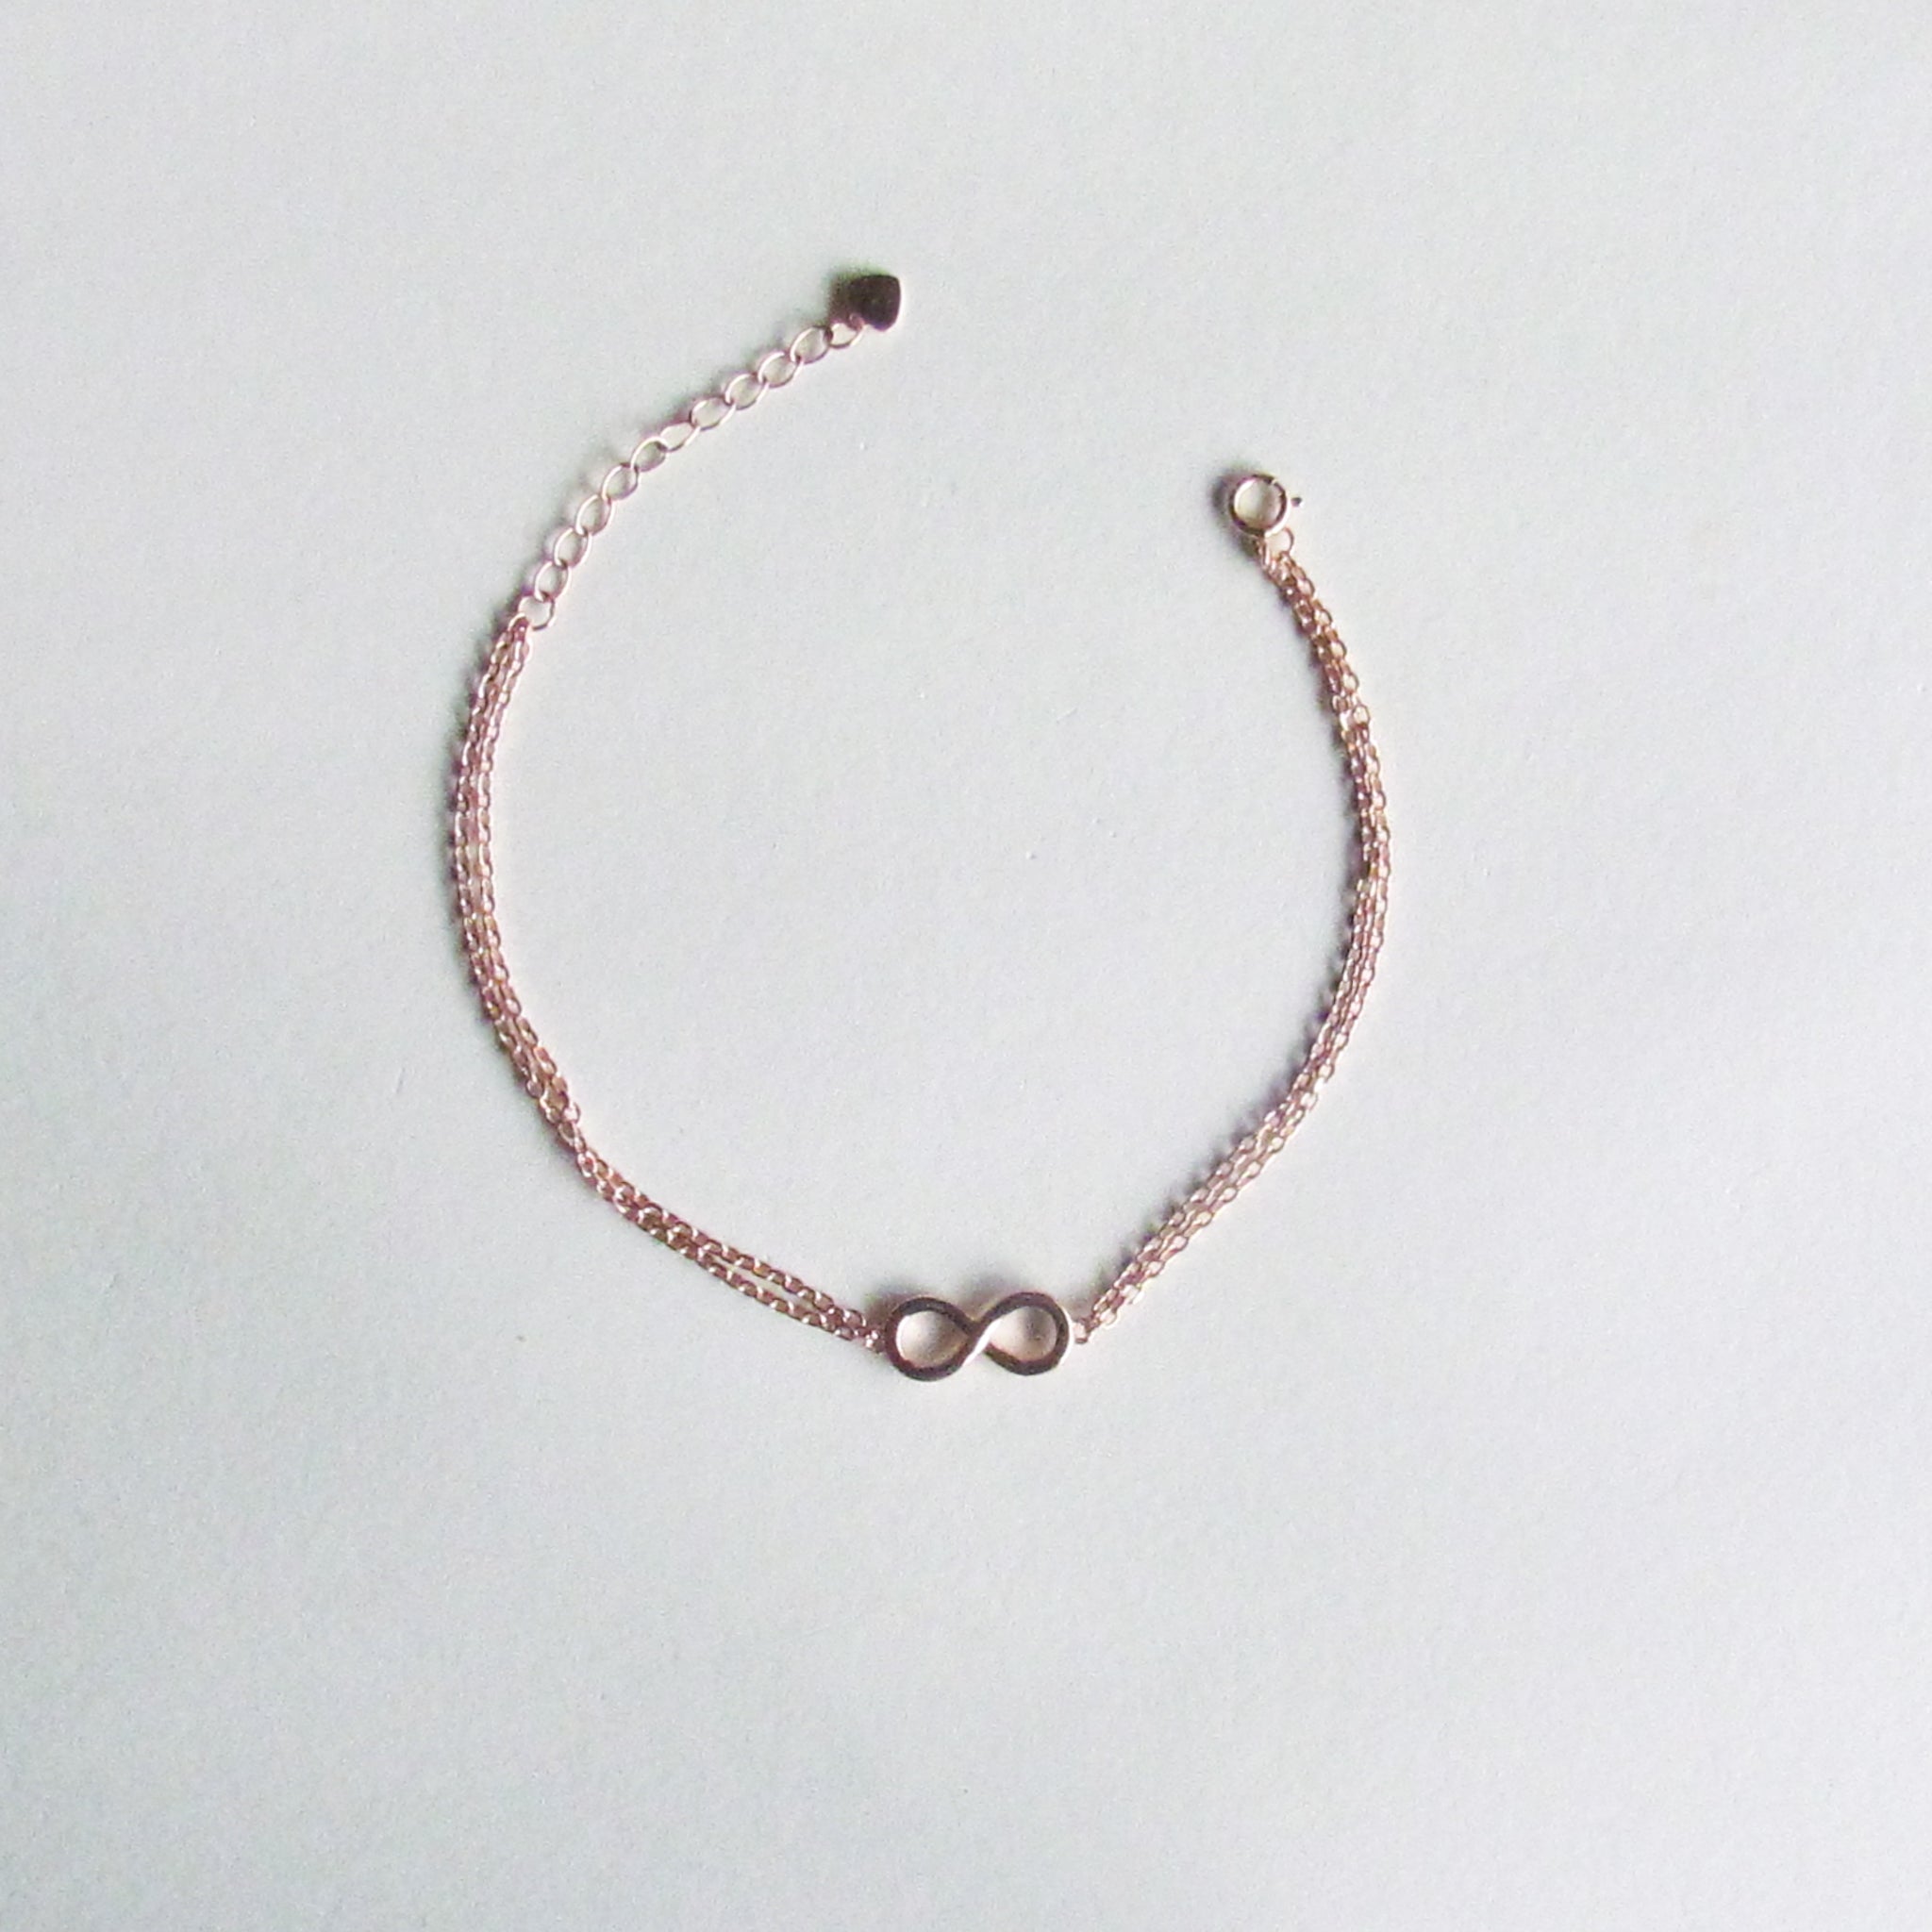 Buy 8 Infinity Bracelet Love Bangle Wrist Luck Bracelet Bangle for Women  Men Gold Sliver Adjustable Chain Silver at Amazonin